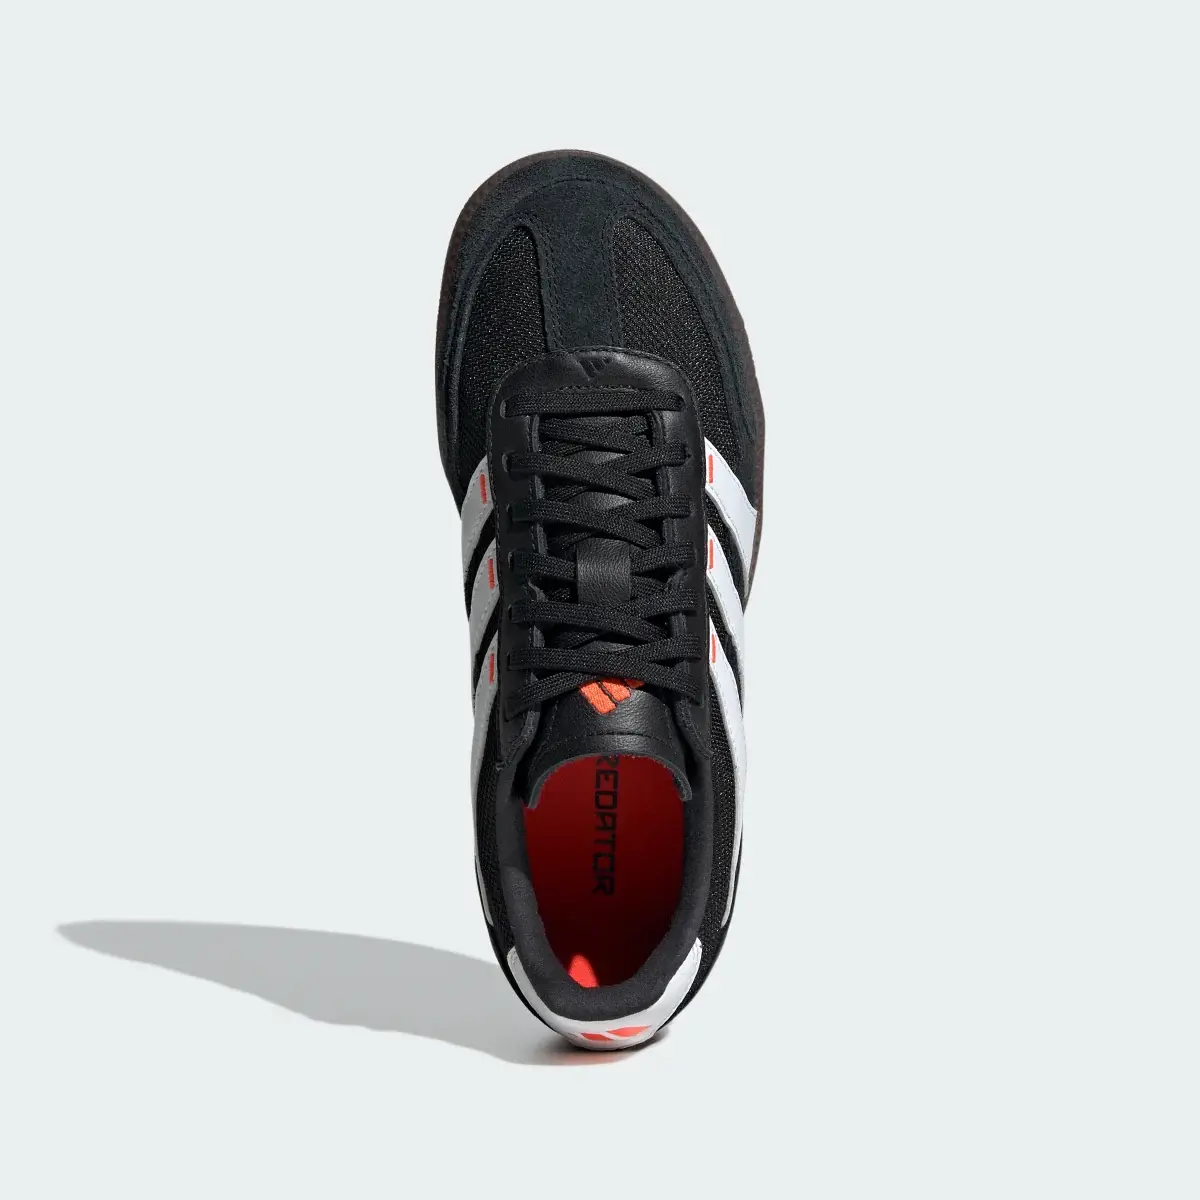 Adidas Predator Freestyle Indoor Football Boots. 3